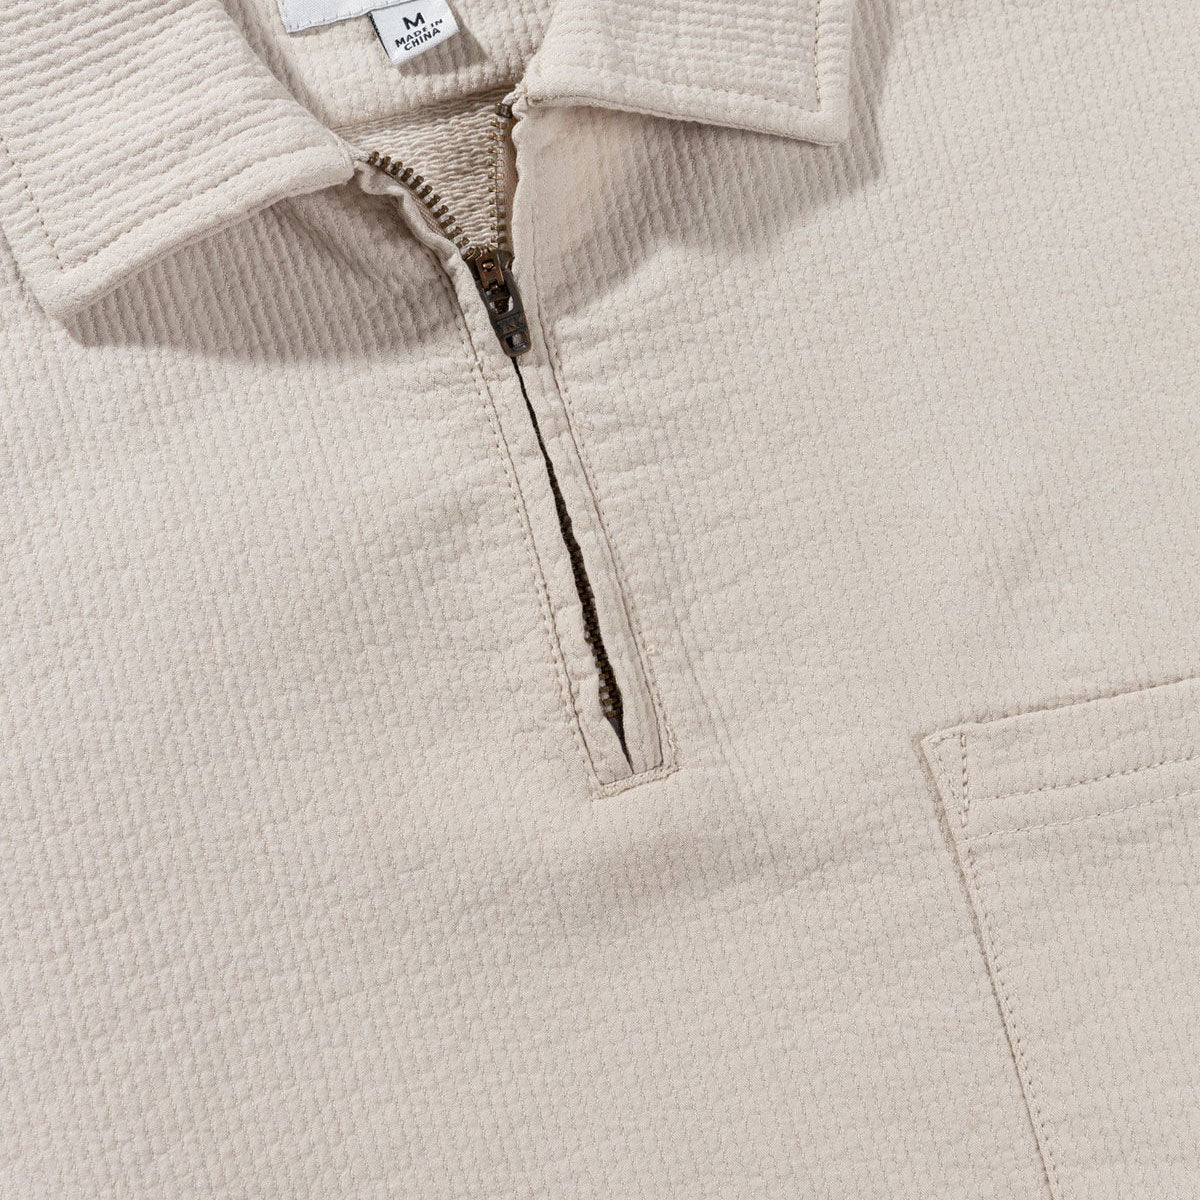 Rhythm Textured Quarter Zip Shirt - Sand image 3